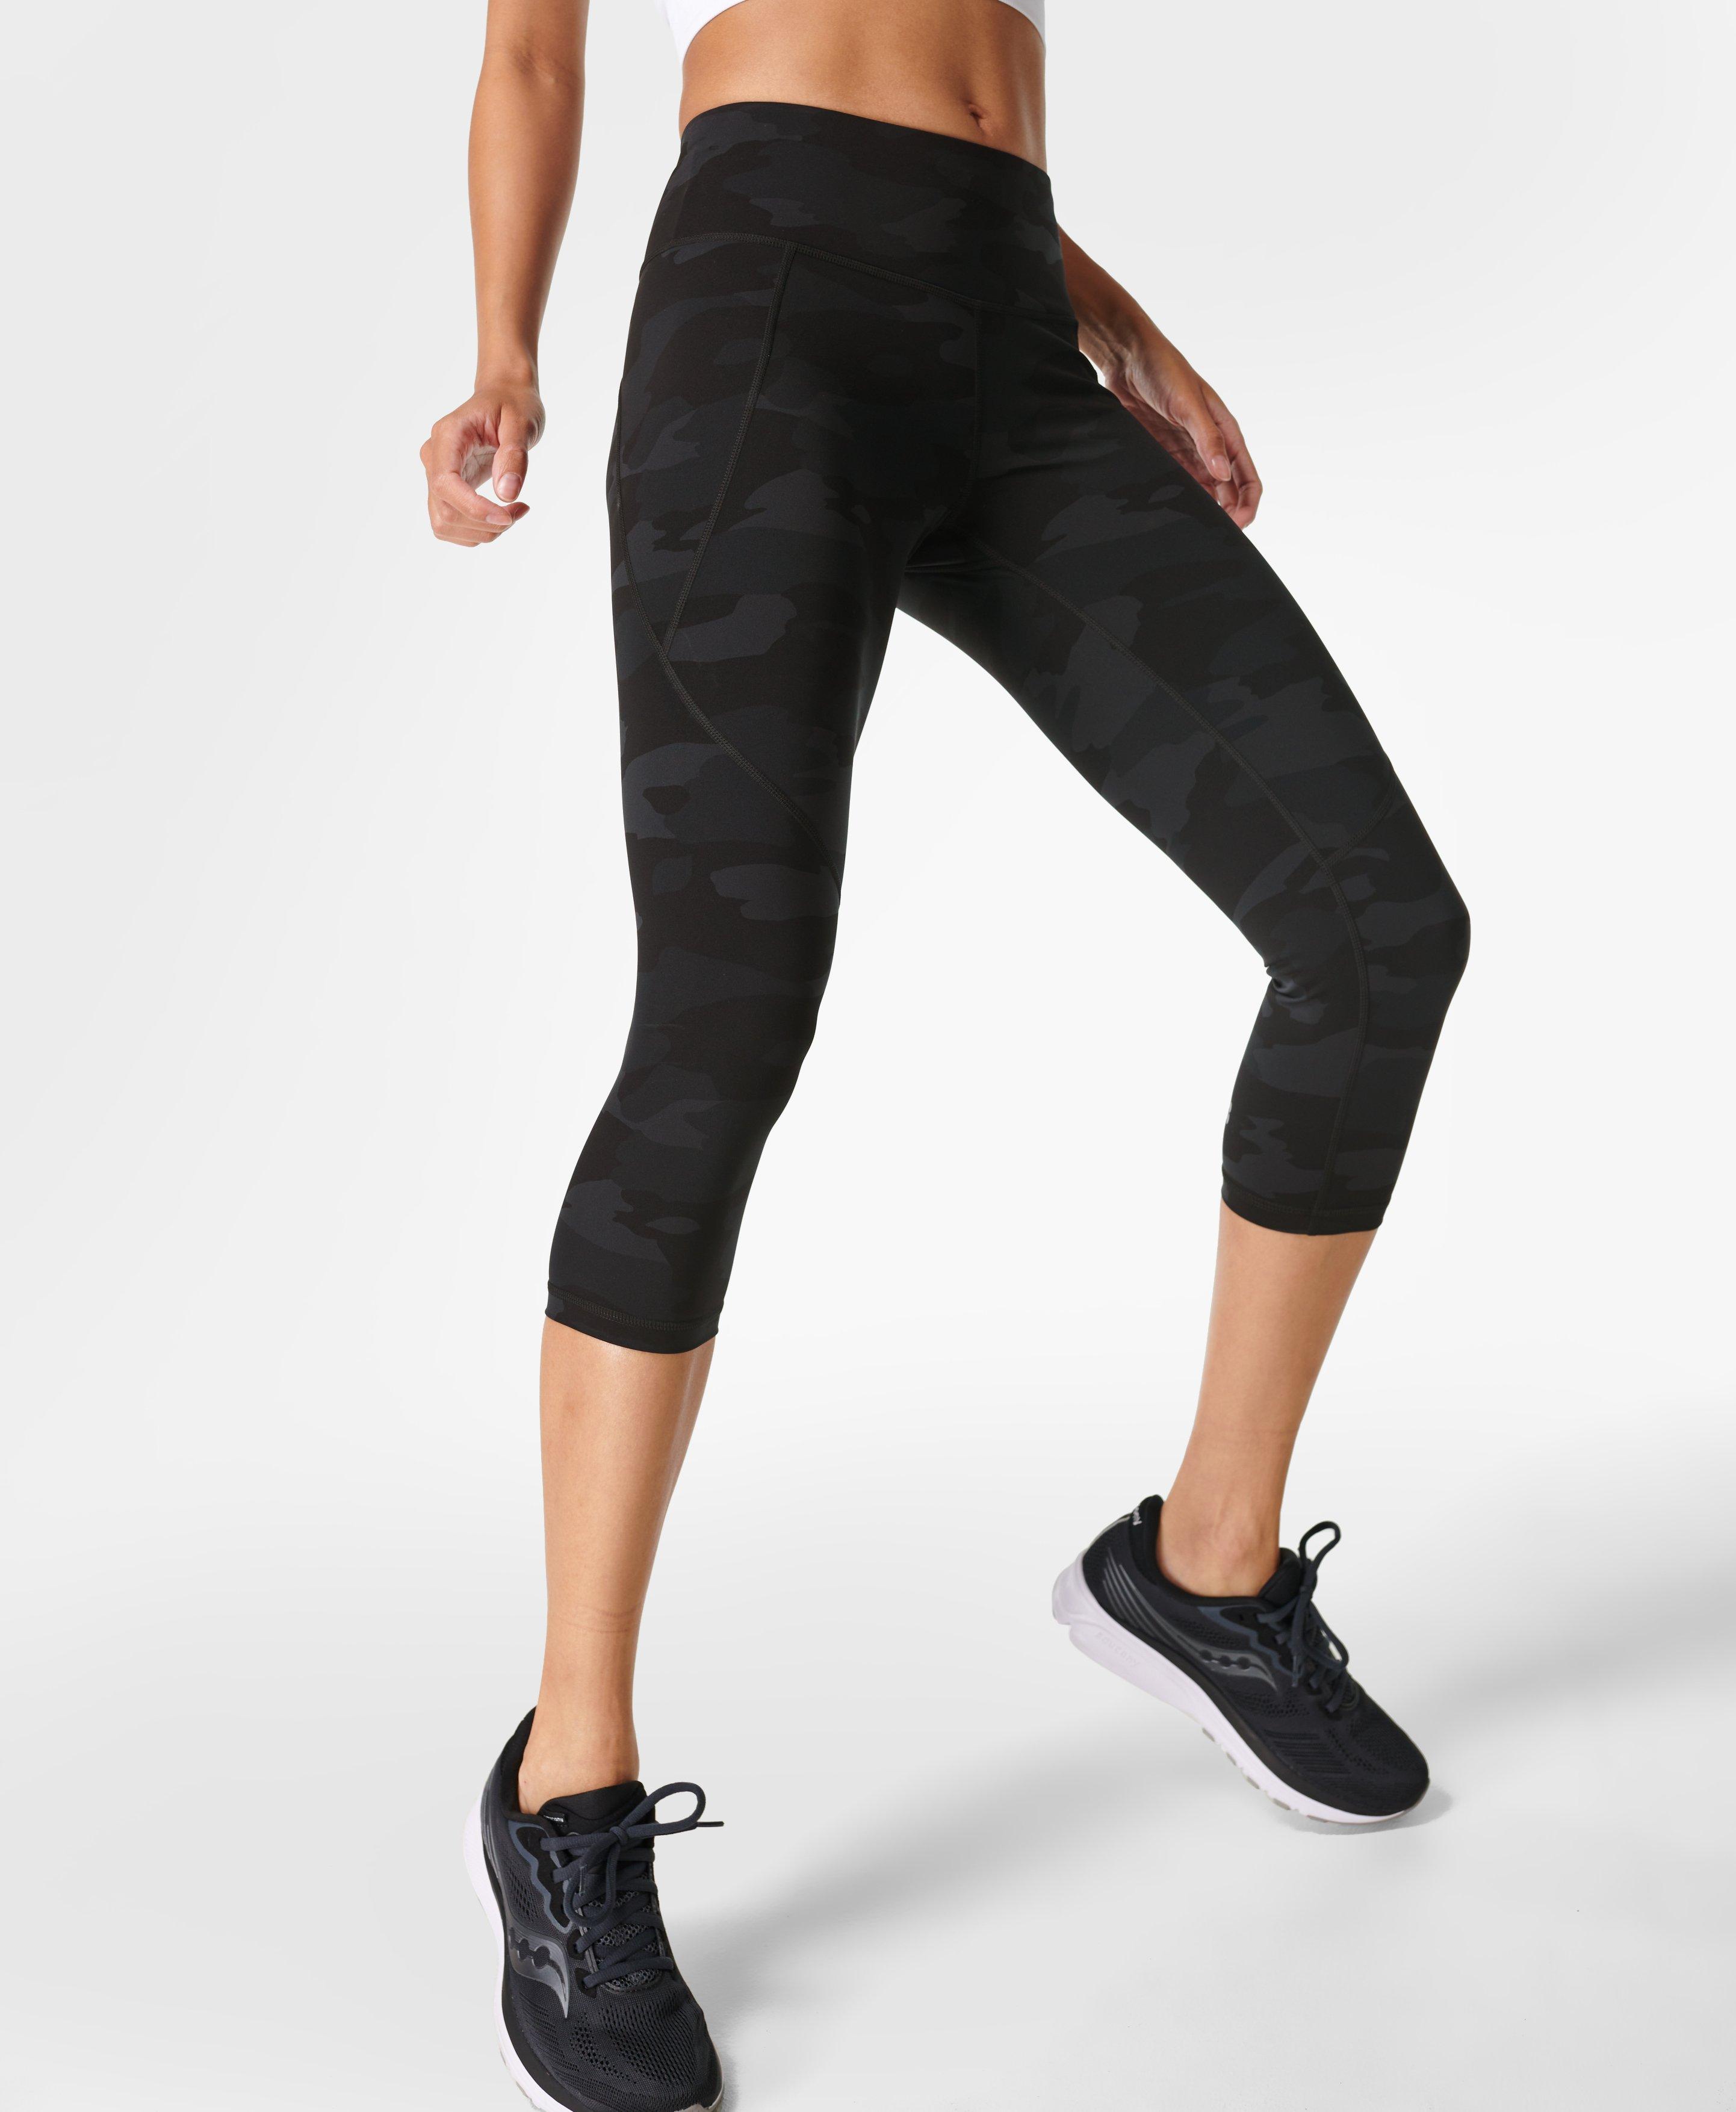 Power Cropped Gym Leggings - Ultra Black Camo Print, Women's Leggings